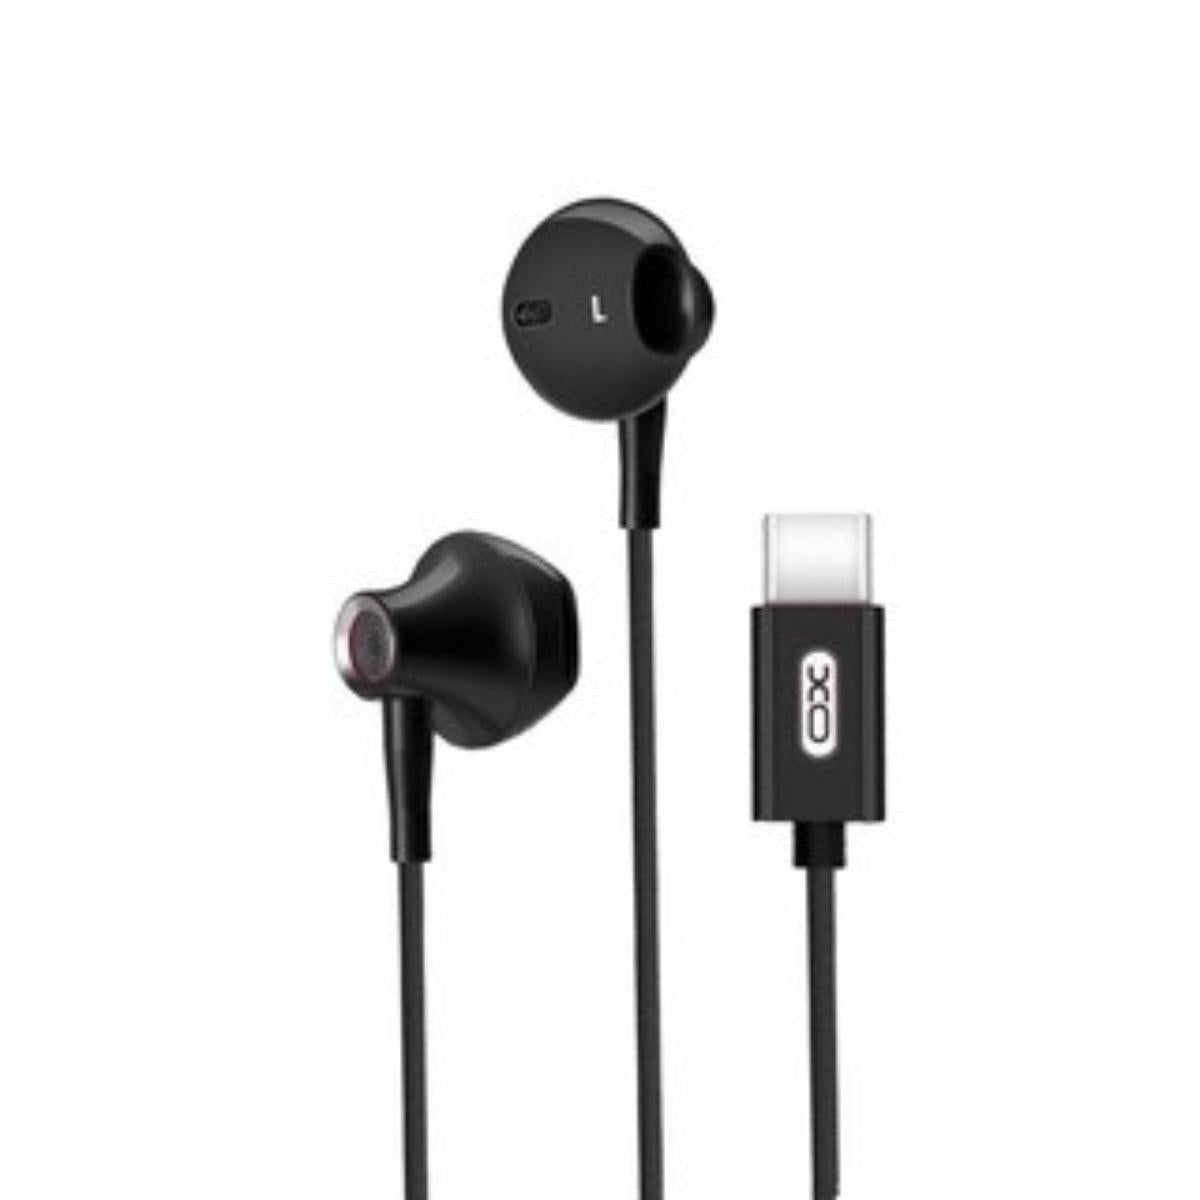 XO-S9/AGTC XO-S9 line control music headphones HEADPHONE / Black / Wired